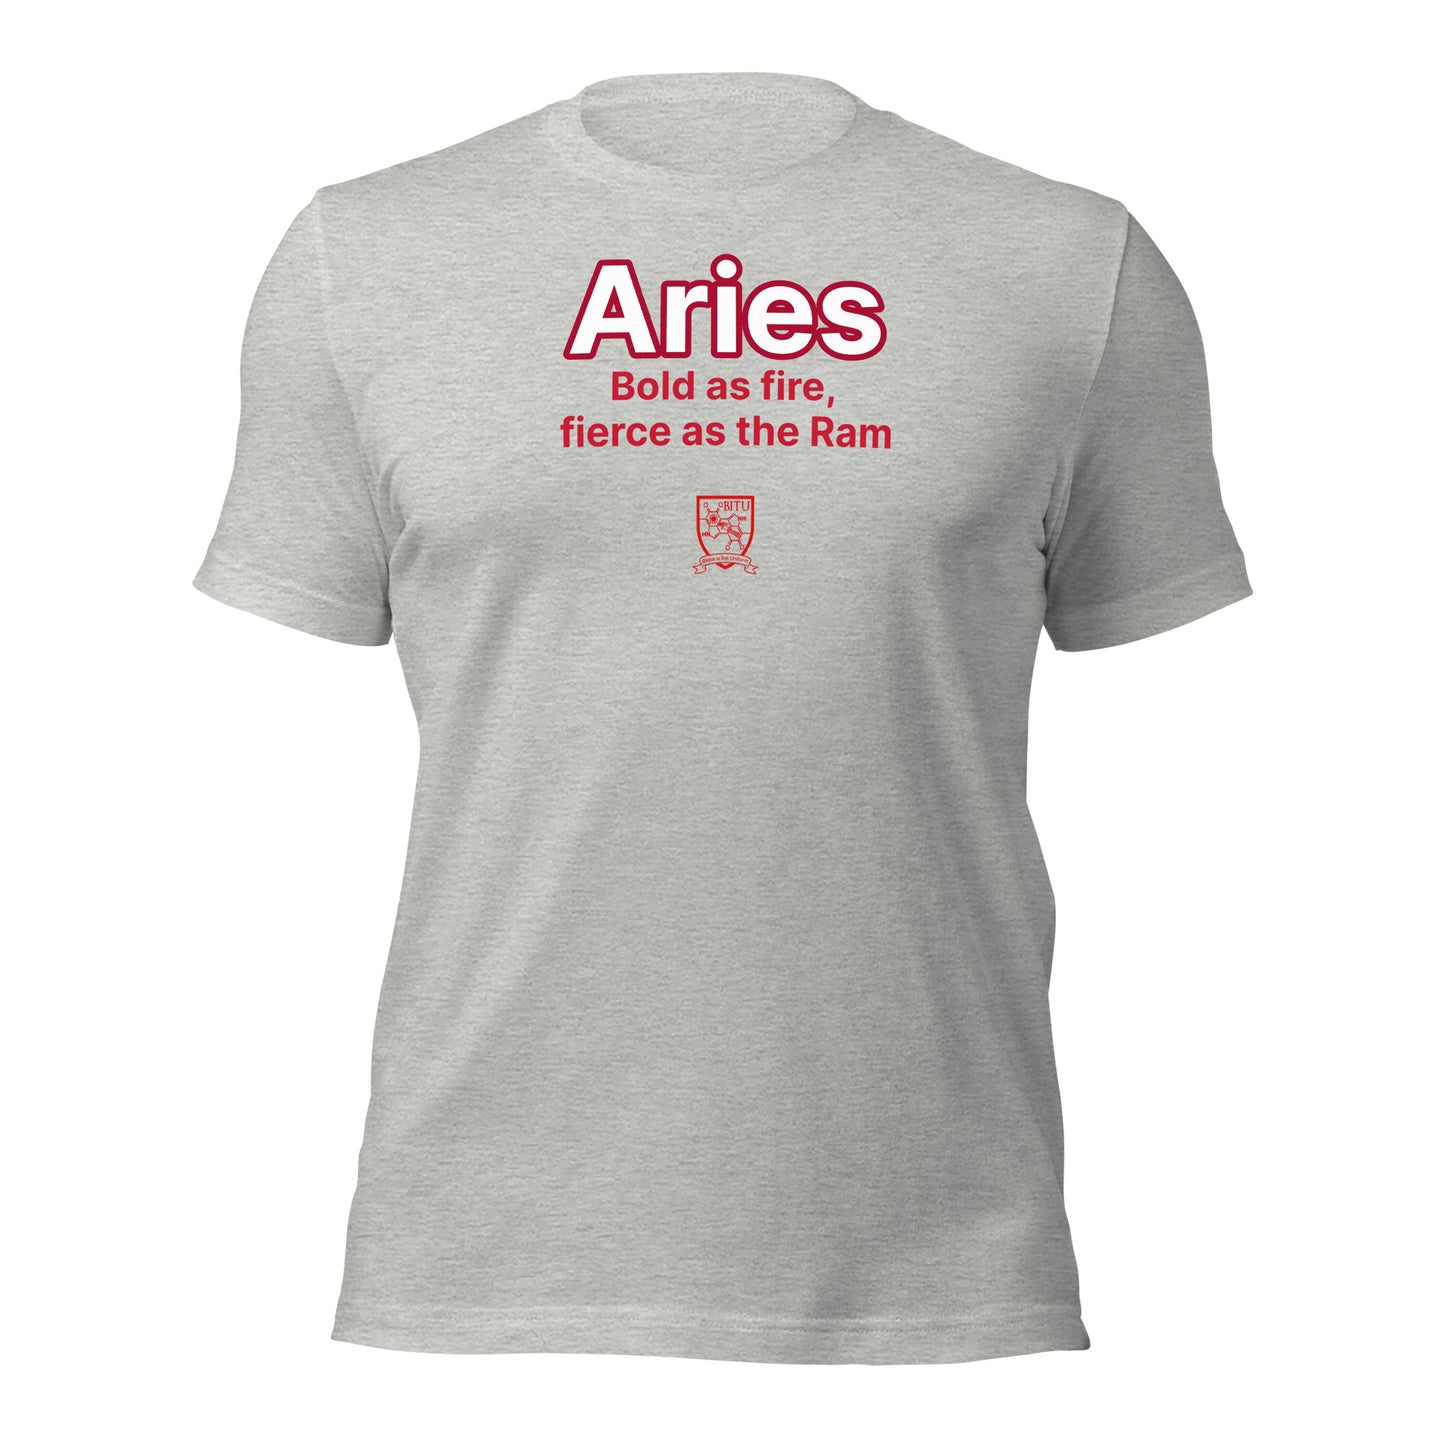 Aries - Bold as fire, fierce as the Ram